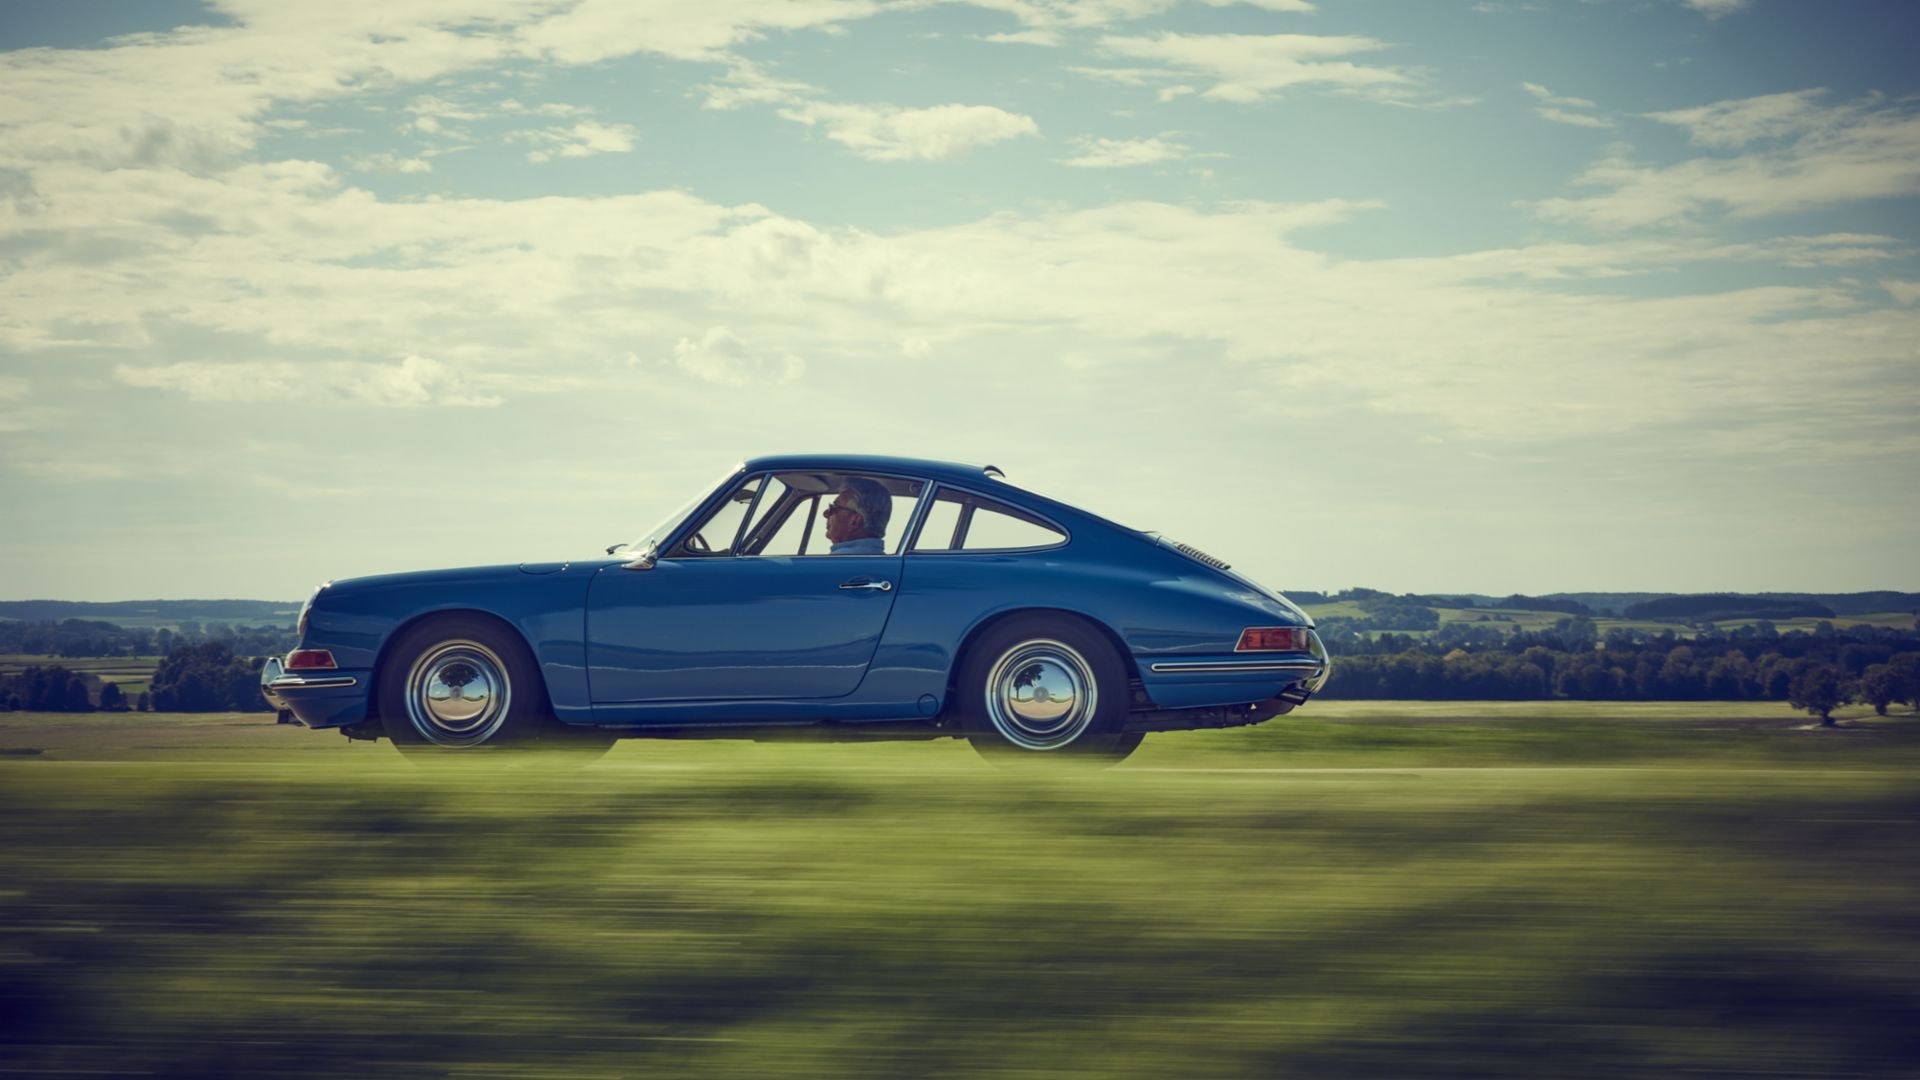 1963 Porsche 901 owned by Alois Ruf Jr.